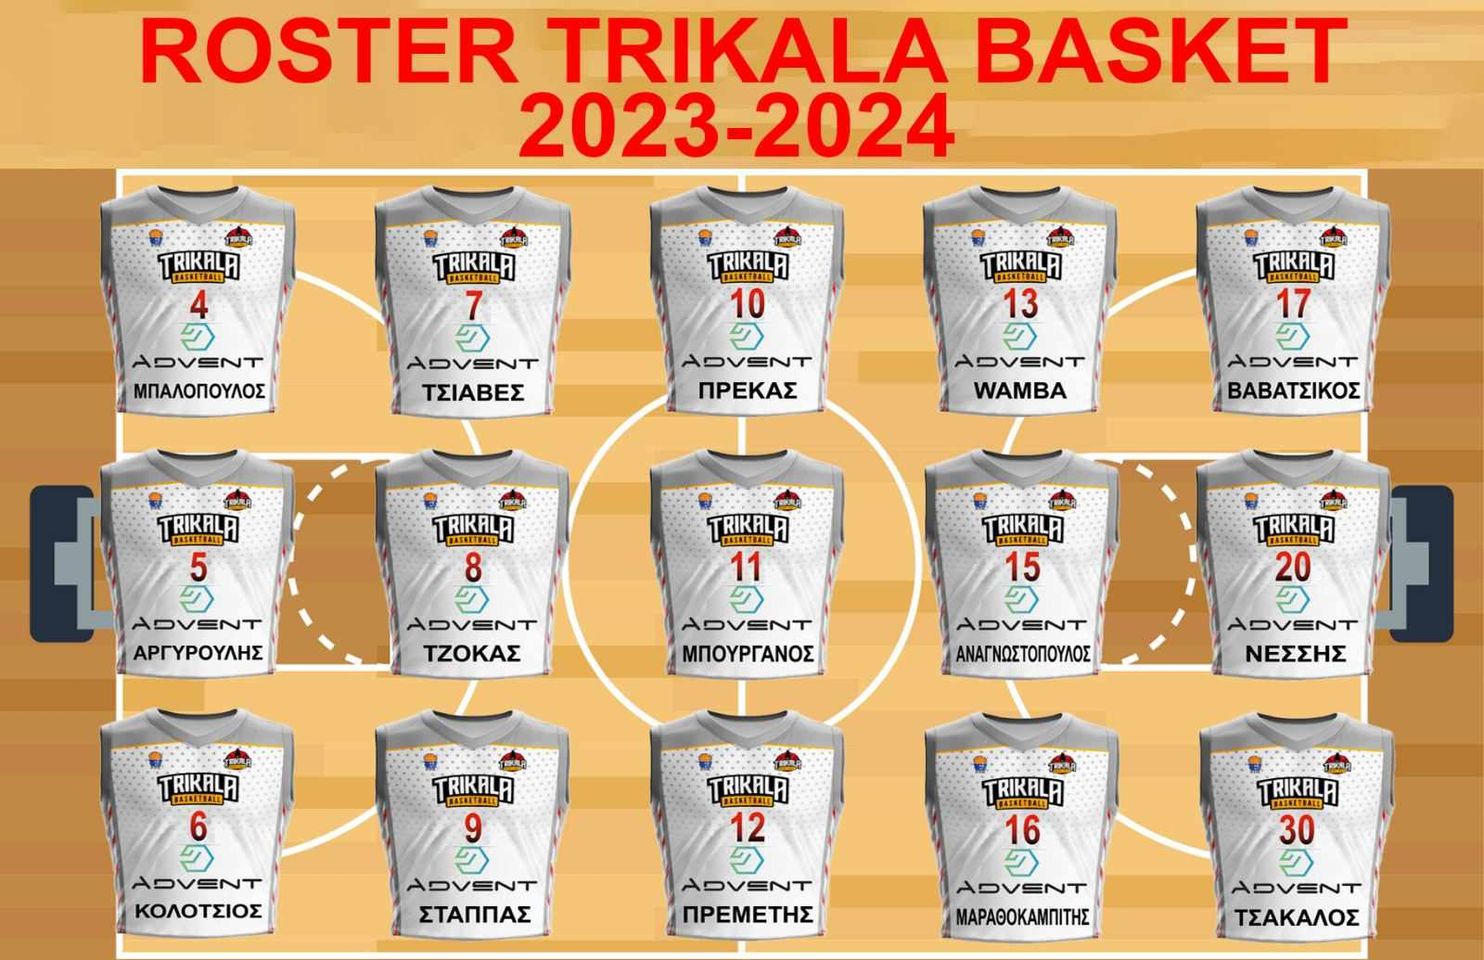 Trikala Basket: Παρουσίασαν το ρόστερ τους, ξεκινούν προετοιμασία